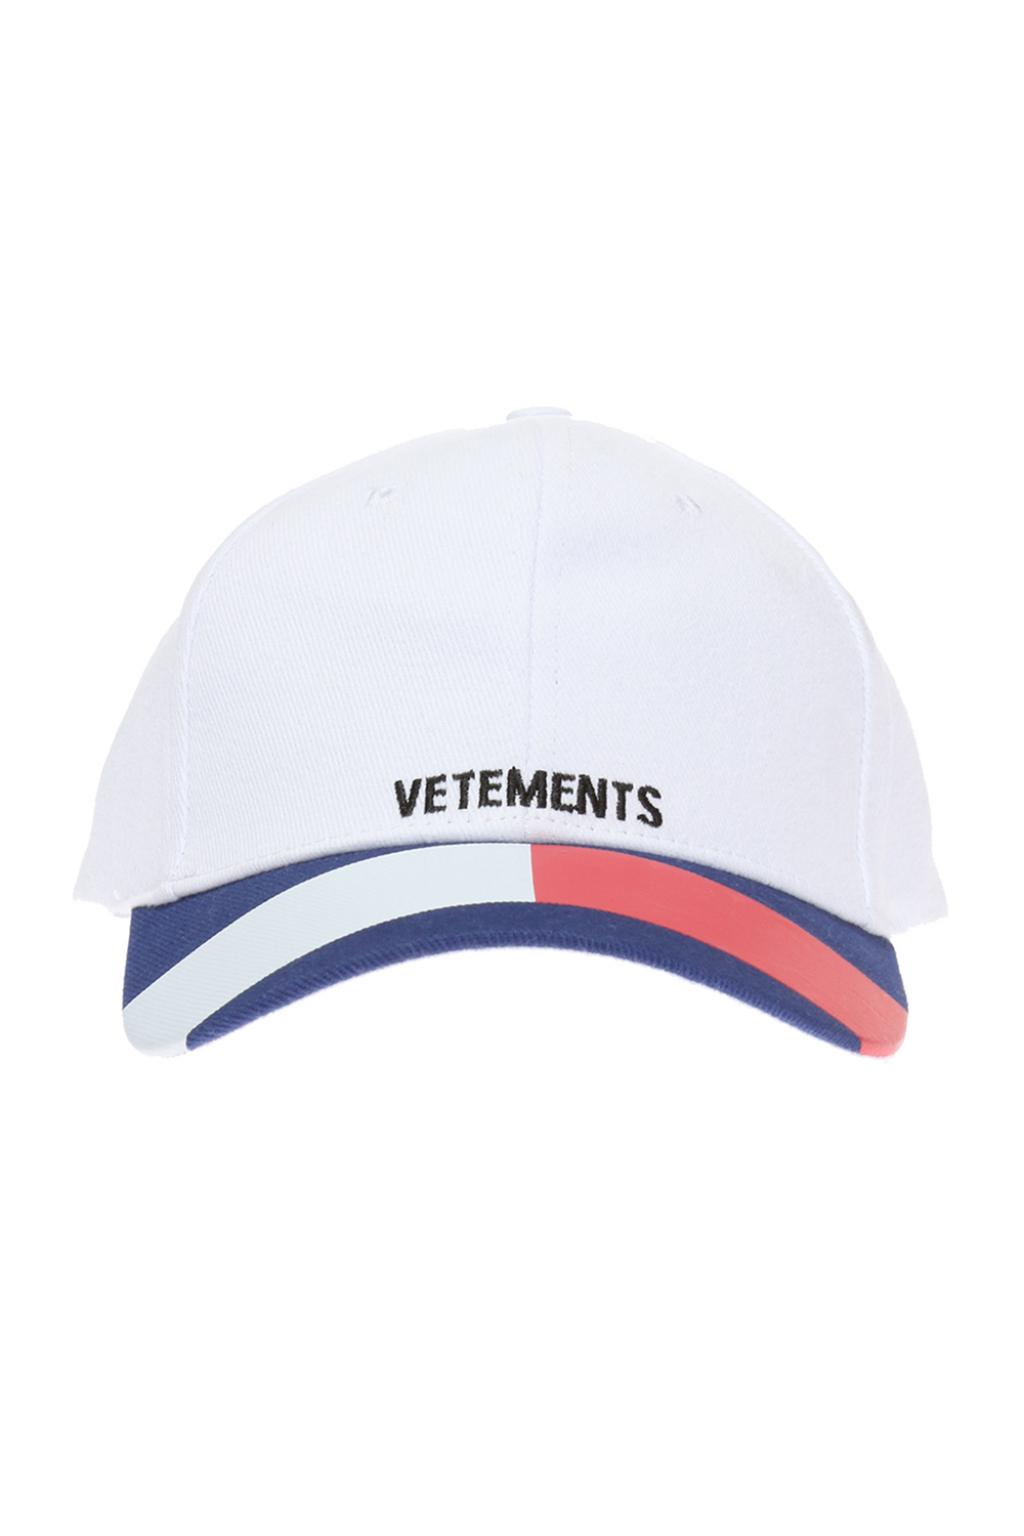 VETEMENTS Vetements x Tommy Hilfiger | Men's Accessorie | Vitkac